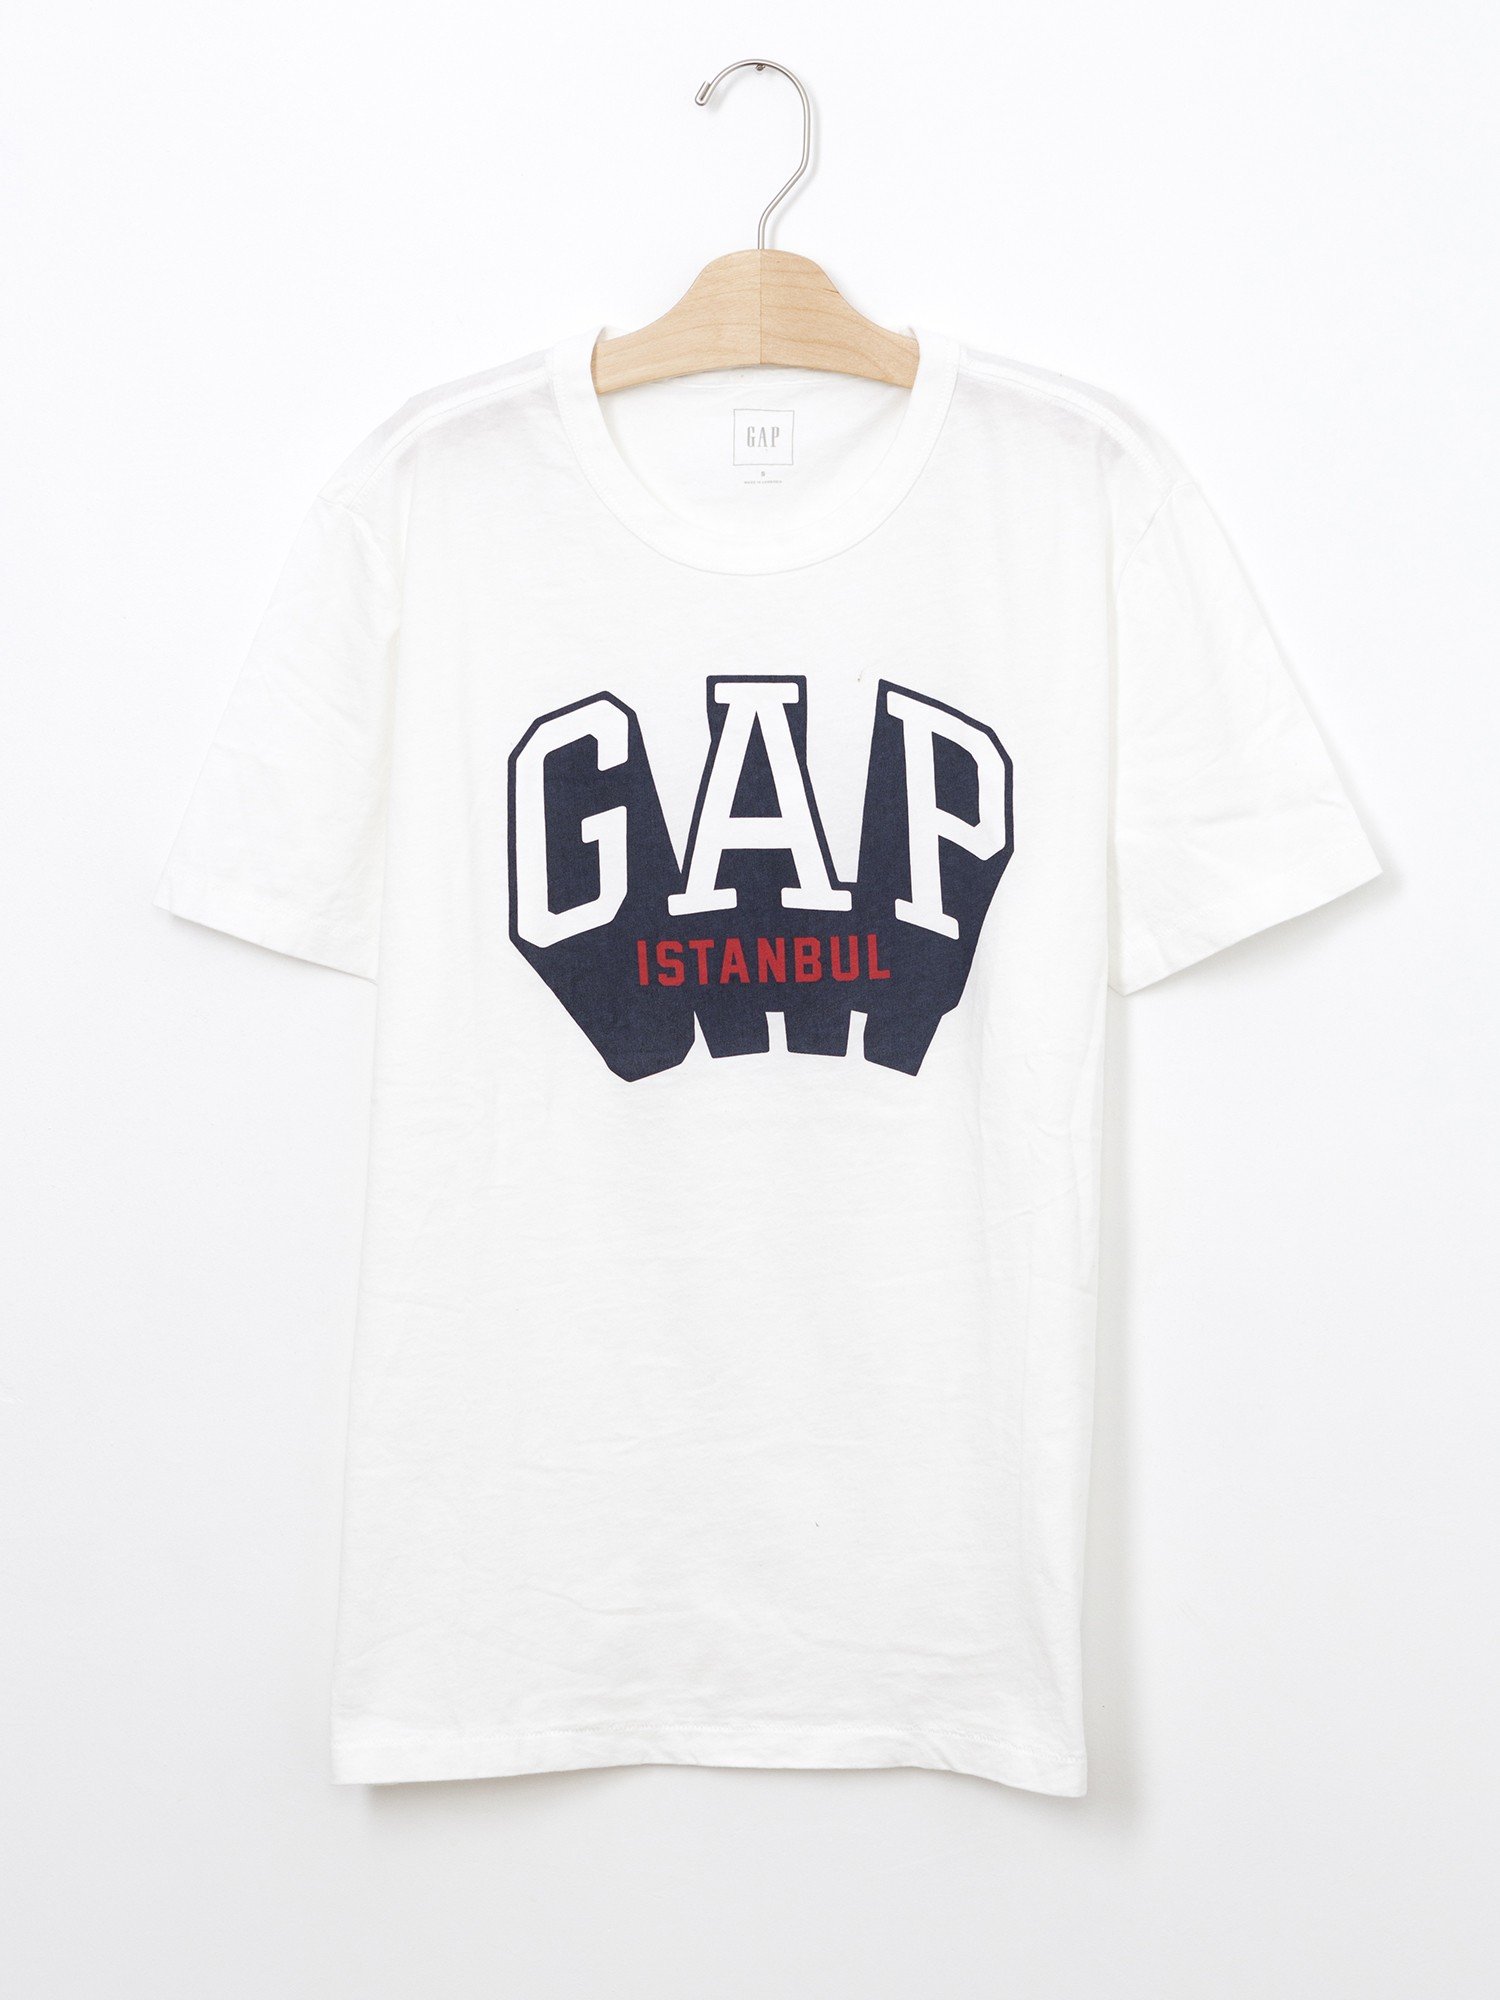 Gap İstanbul t-shirt product image